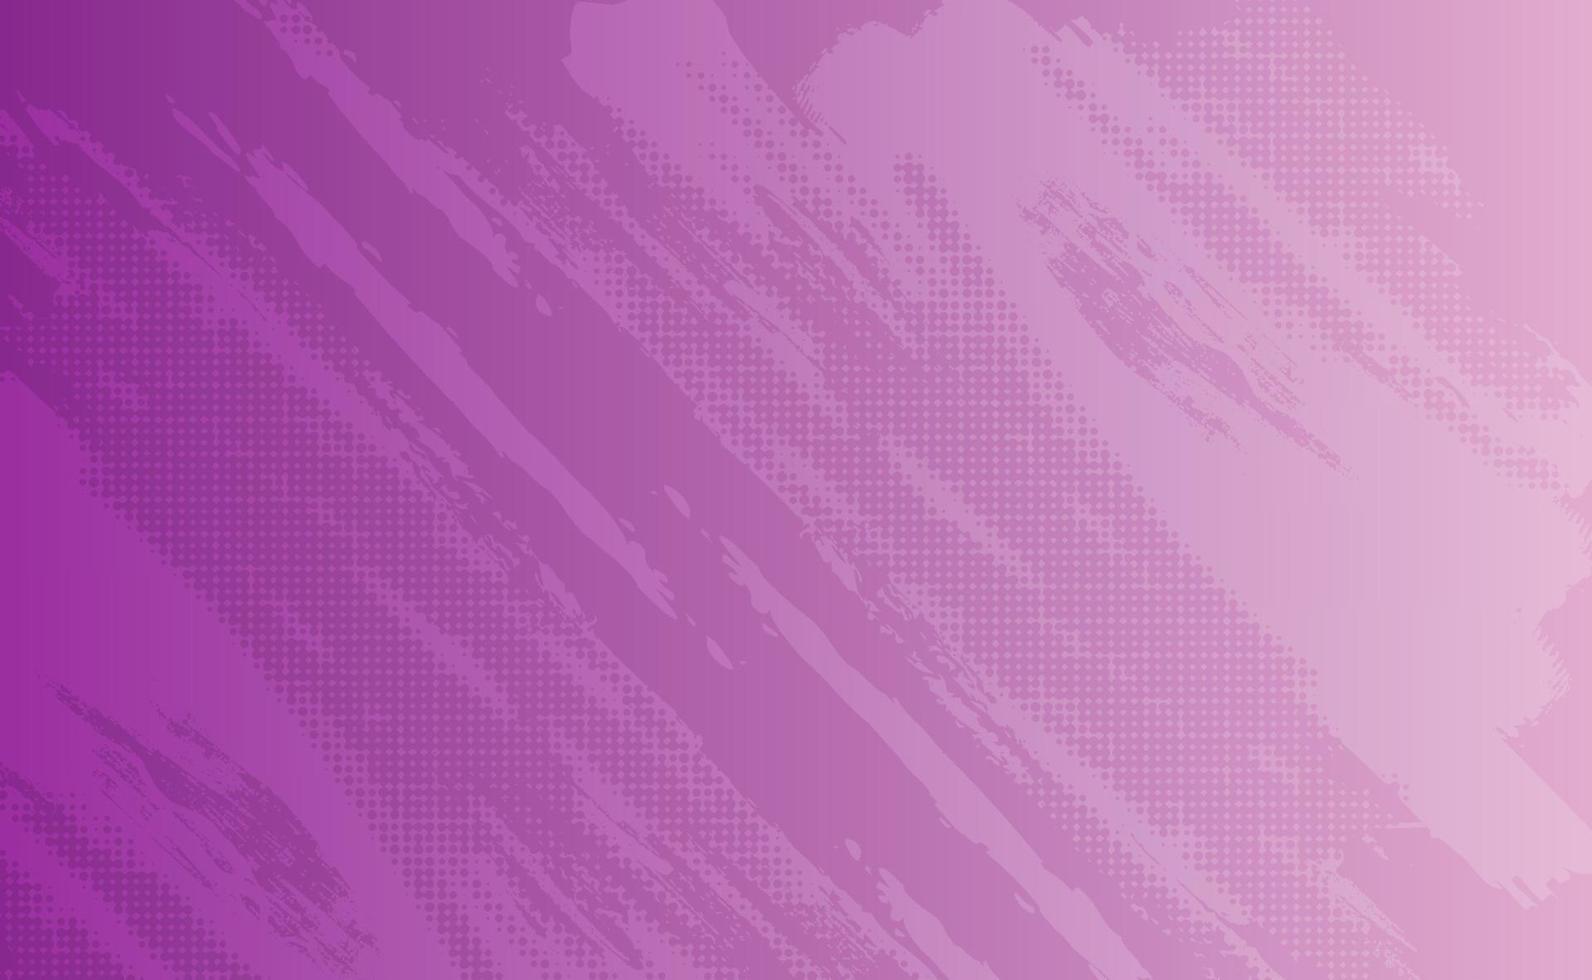 Purple Grunge Background free vector download